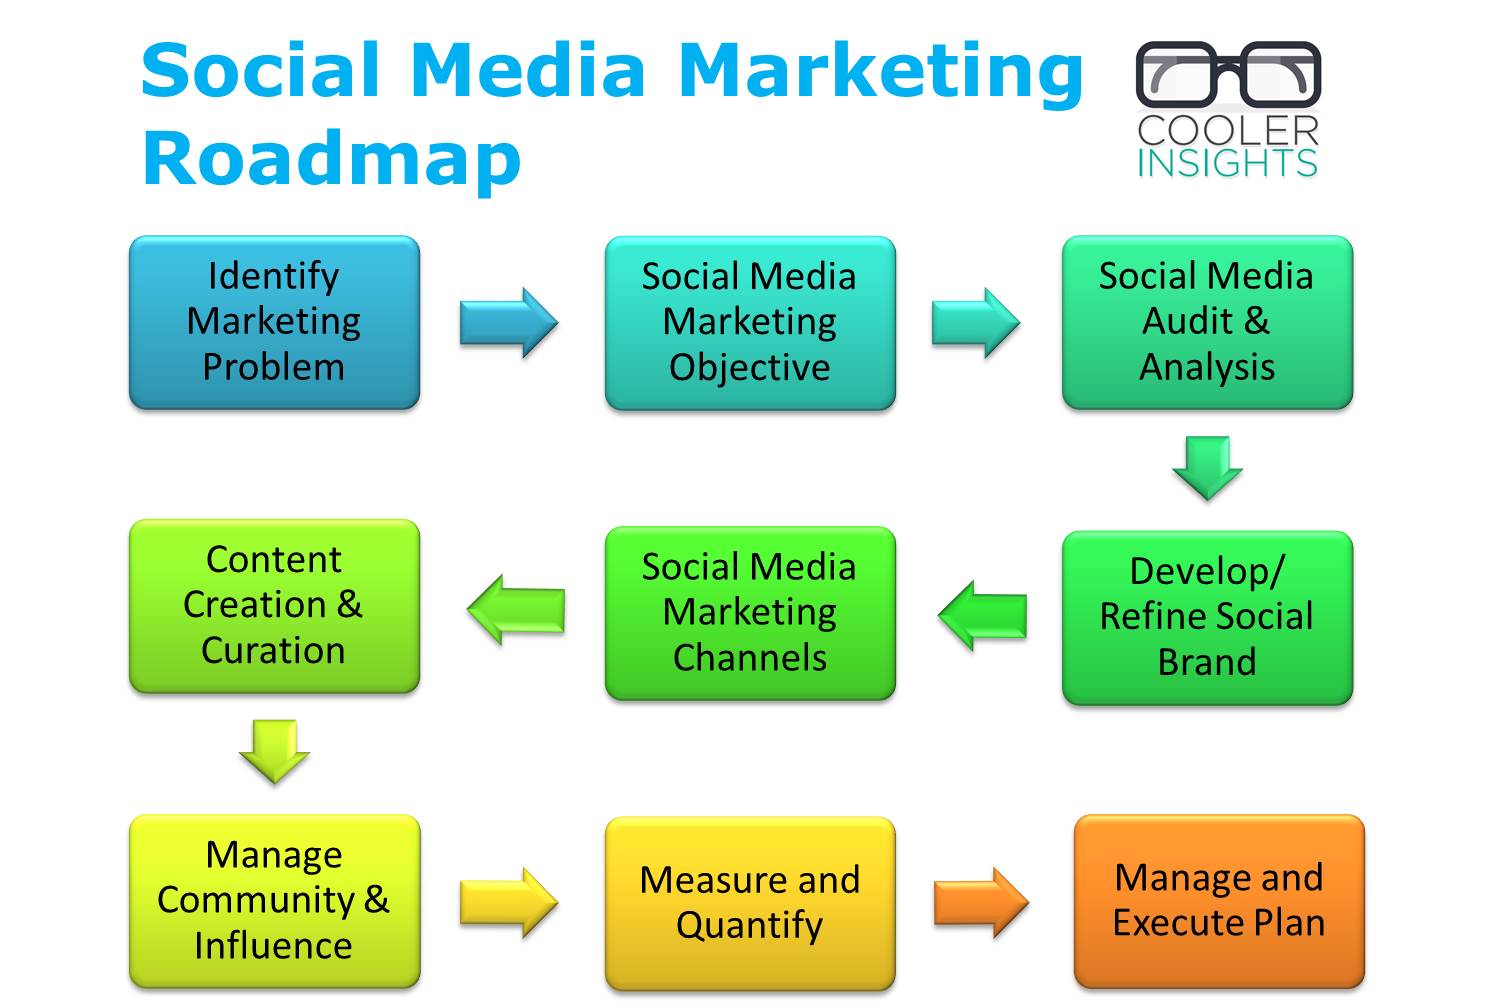 social-media-marketing-roadmap-a-simple-9-step-process.jpg